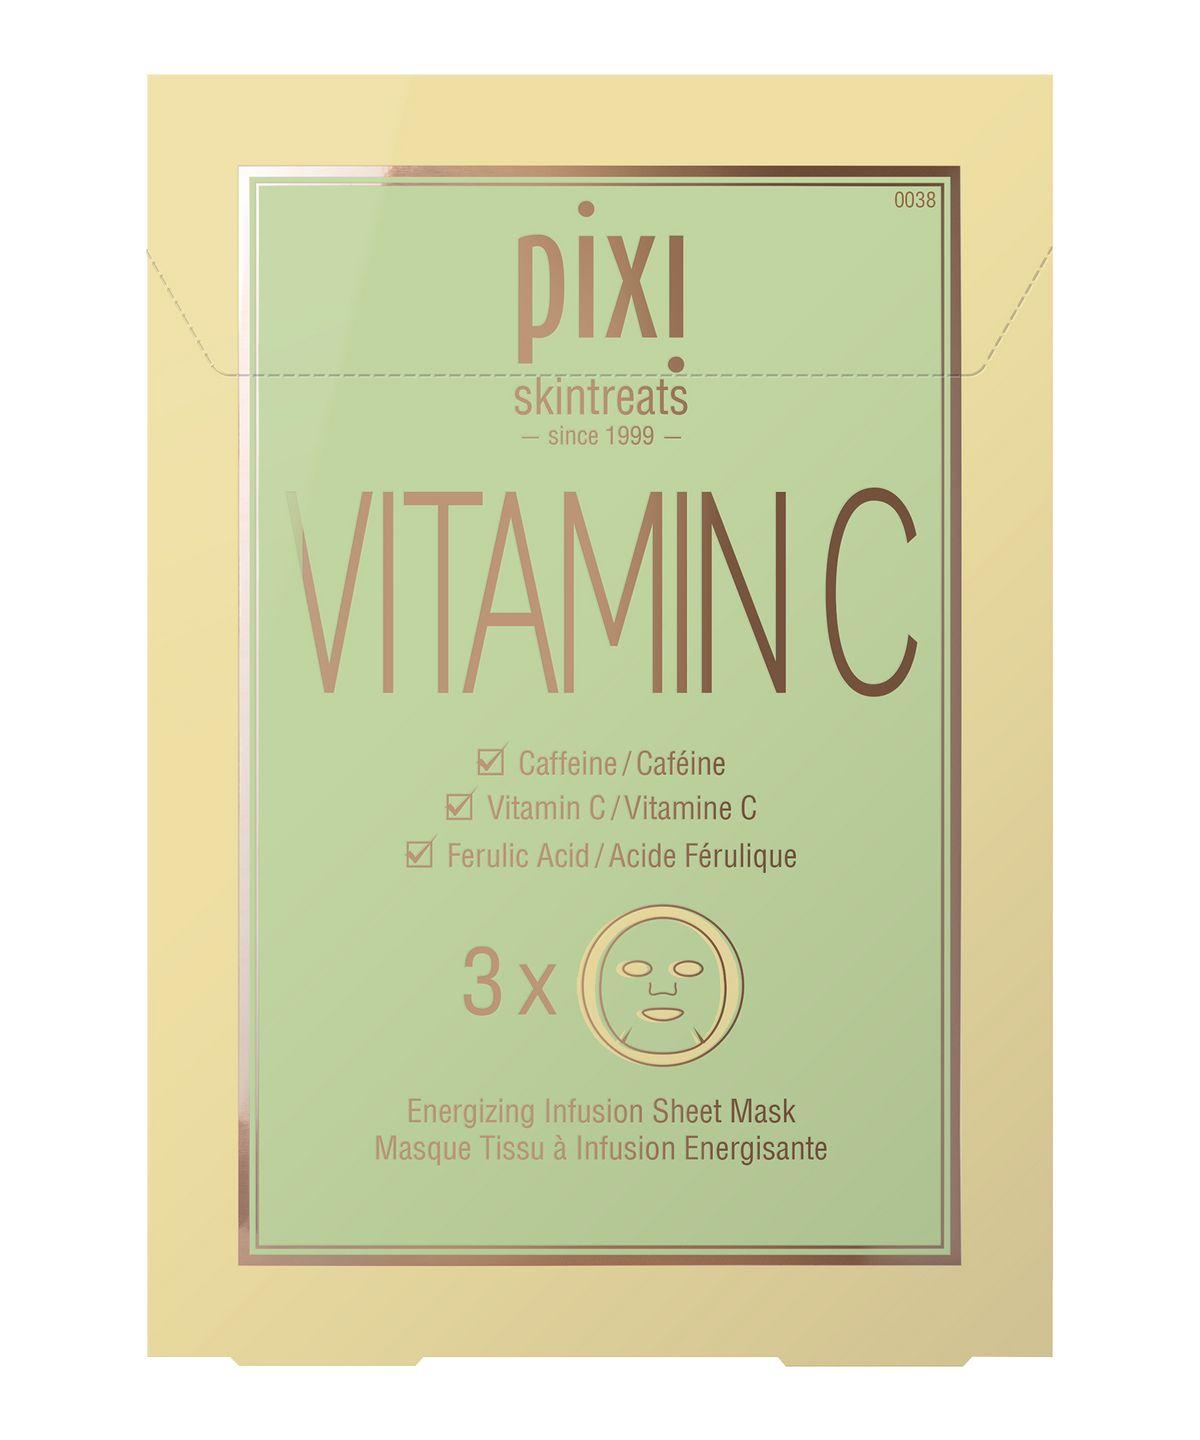 Pixi Vitamin-C Energizing Infusion Sheet Mask